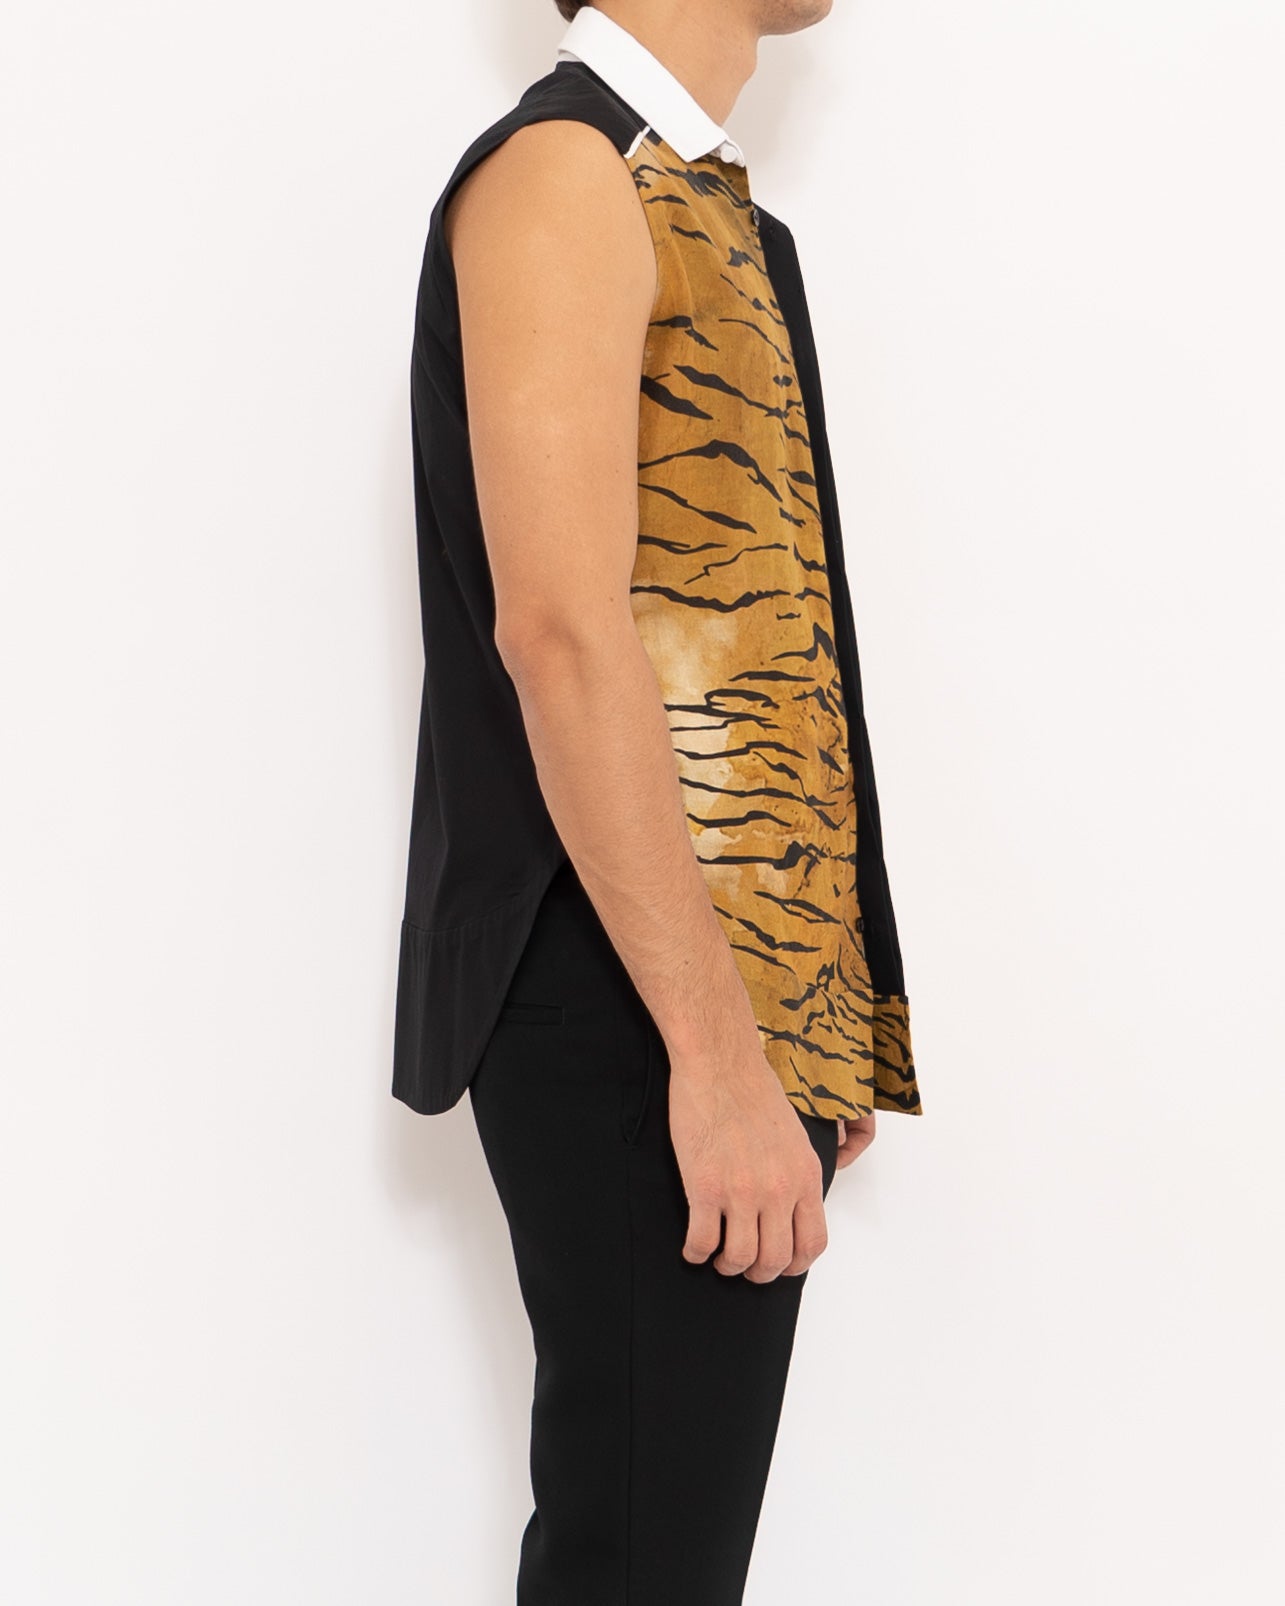 SS20 Sleeveless Tiger Shirt Sample